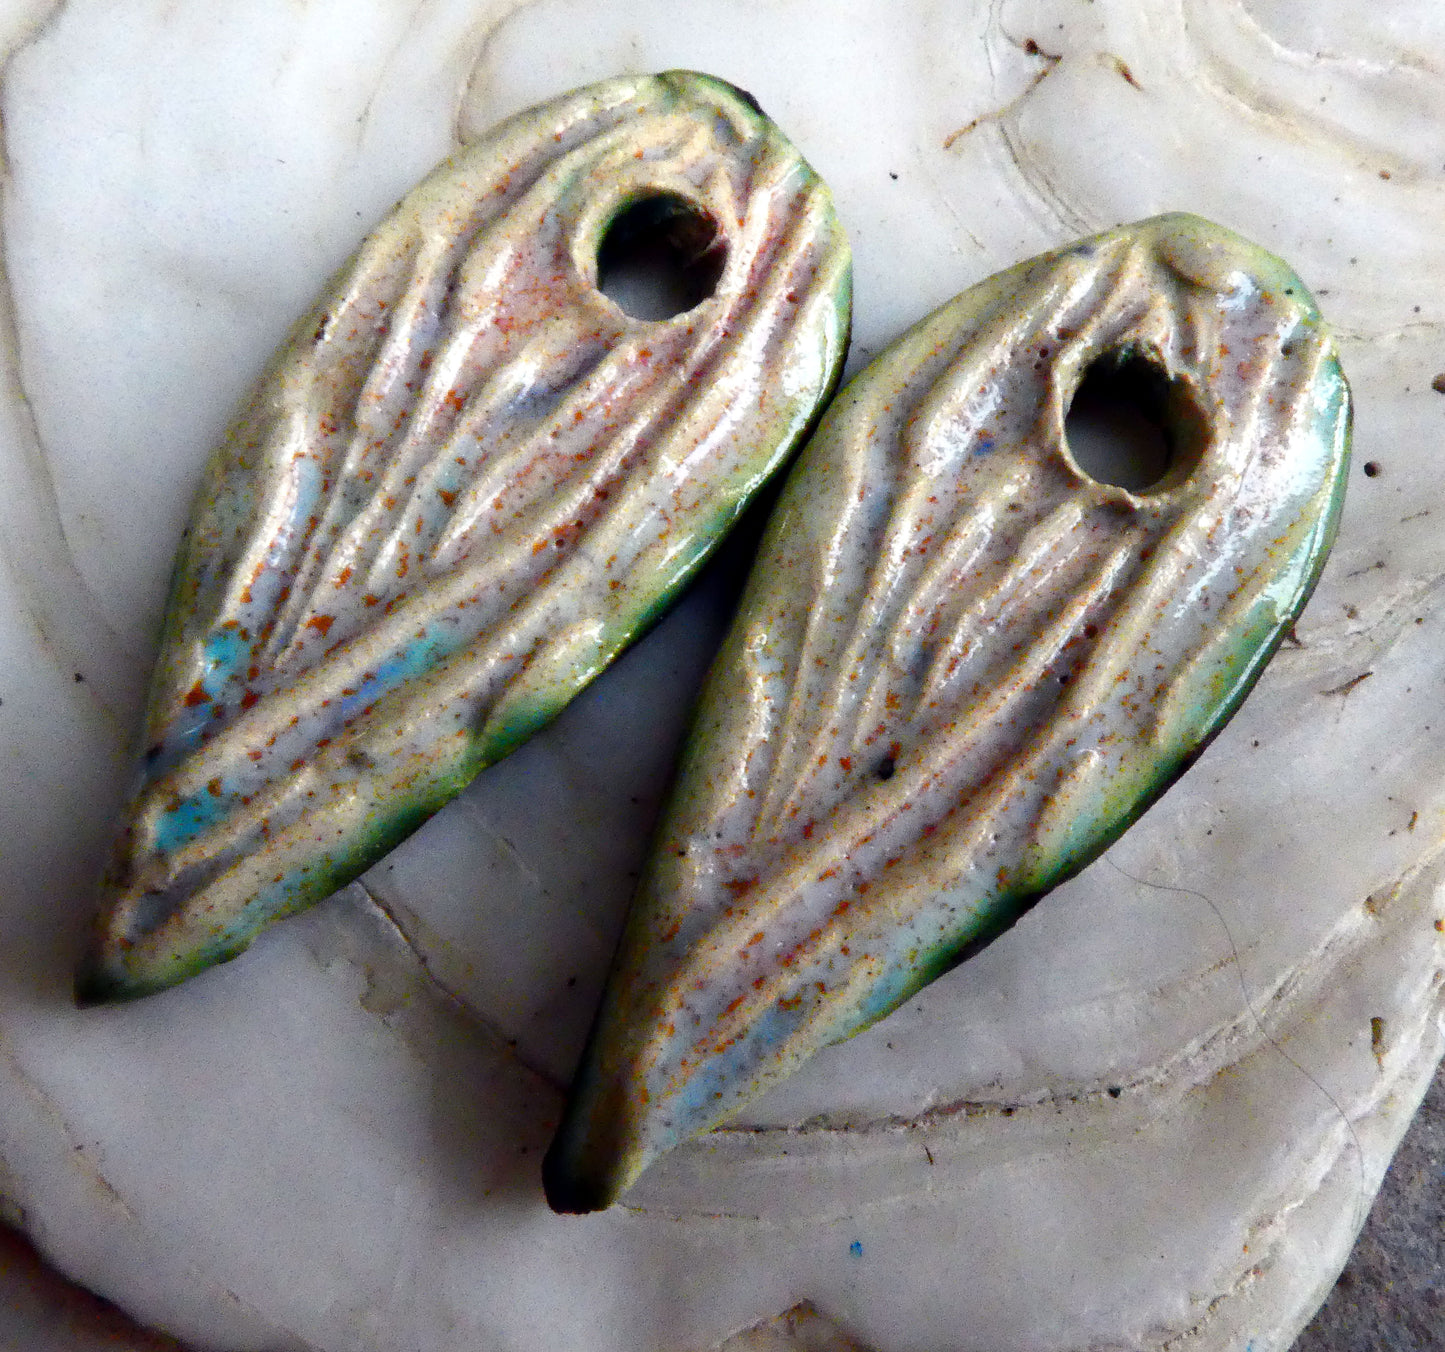 Ceramic Barky Textured Shard Earring Charms - Arizona